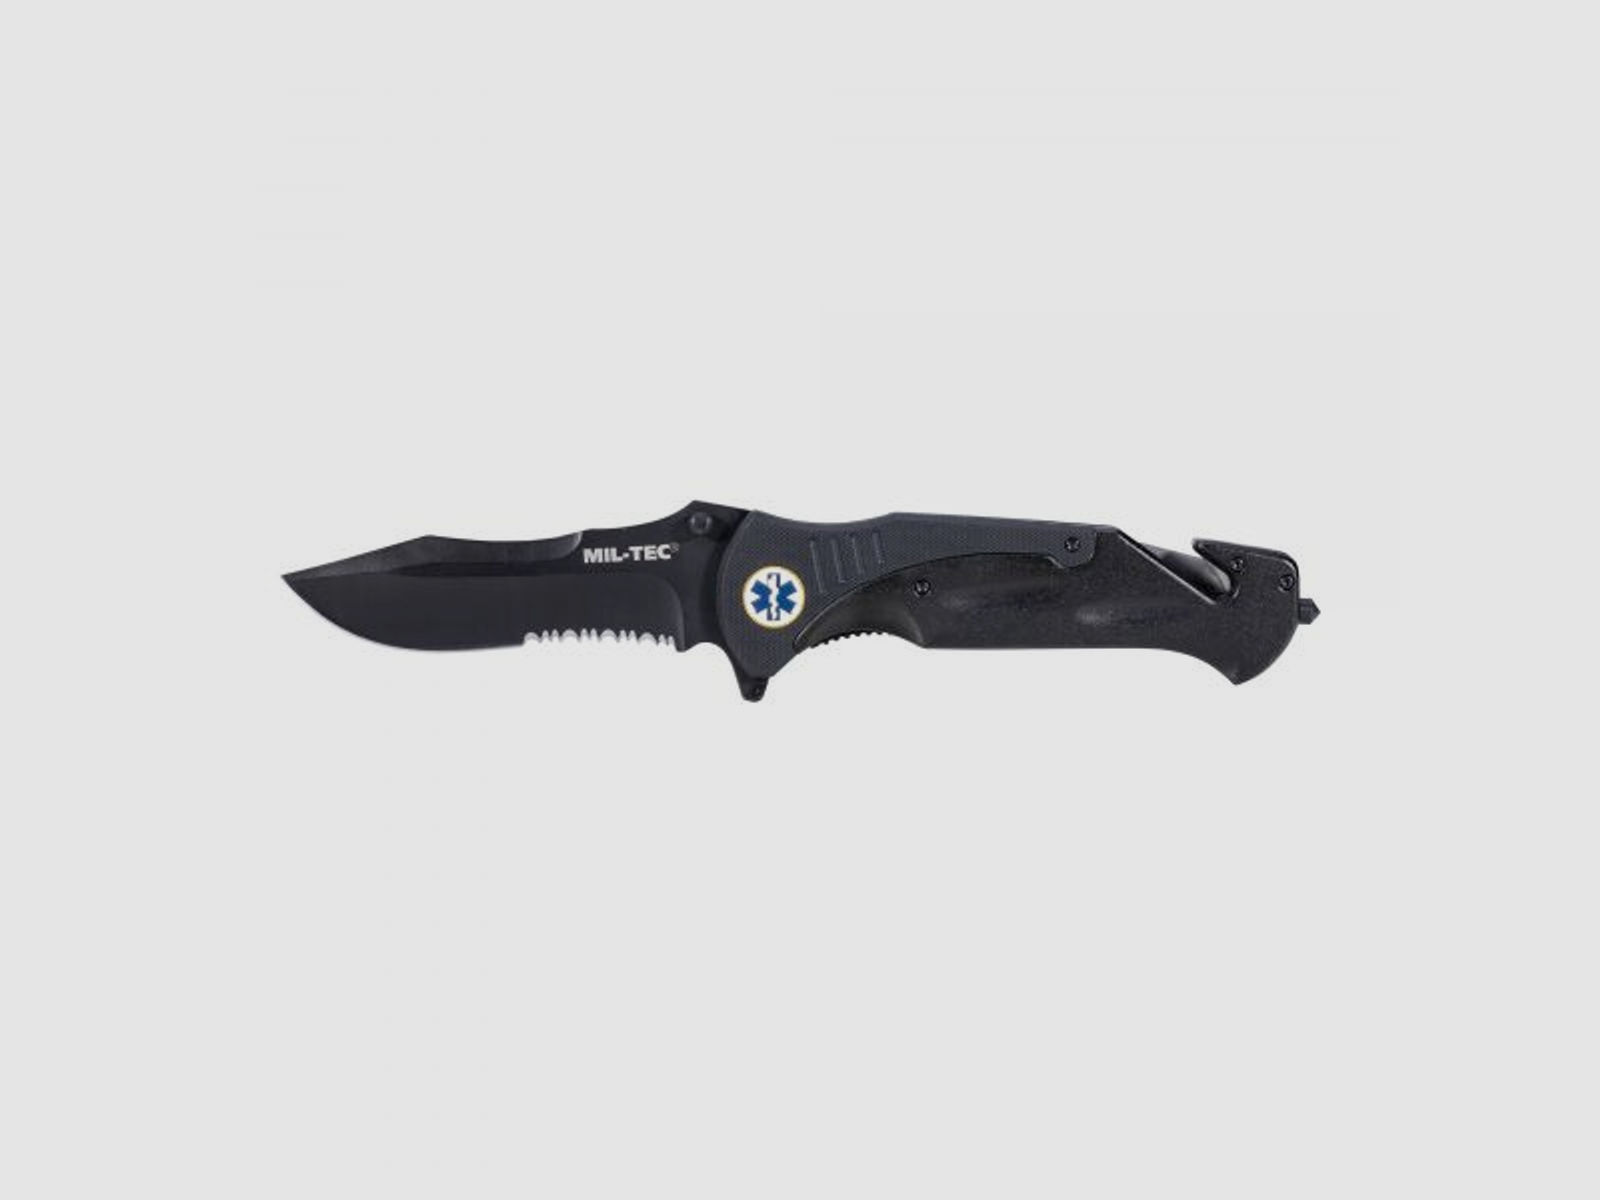 Mil-Tec Mil-Tec Rettungsmesser Pocket Knife 440/G10 schwarz